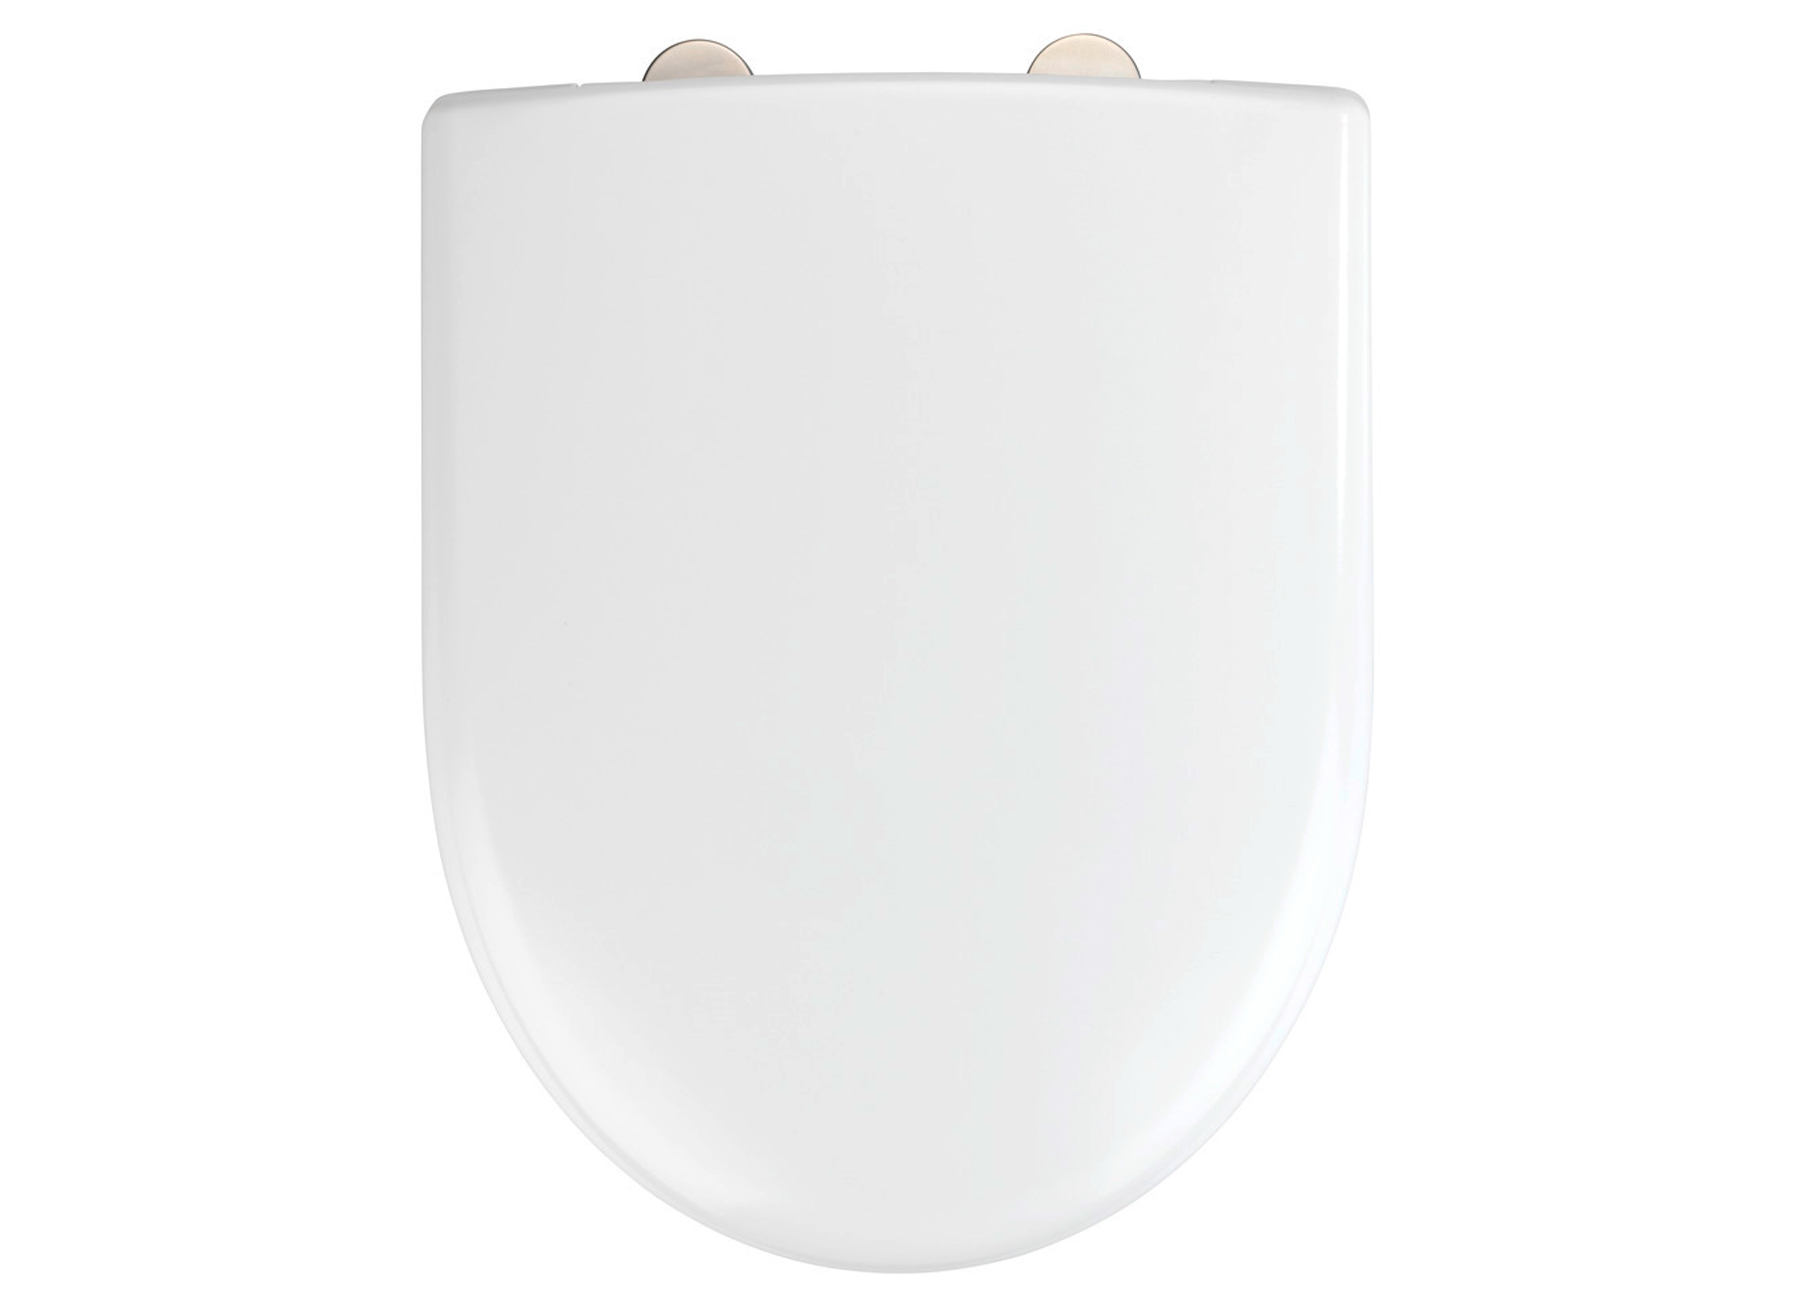 Toiletzitting Exclusive Nr 7 Duroplast Easyclose - sanitair - toilet - wc - wc brillen 7 duroplast easyclose